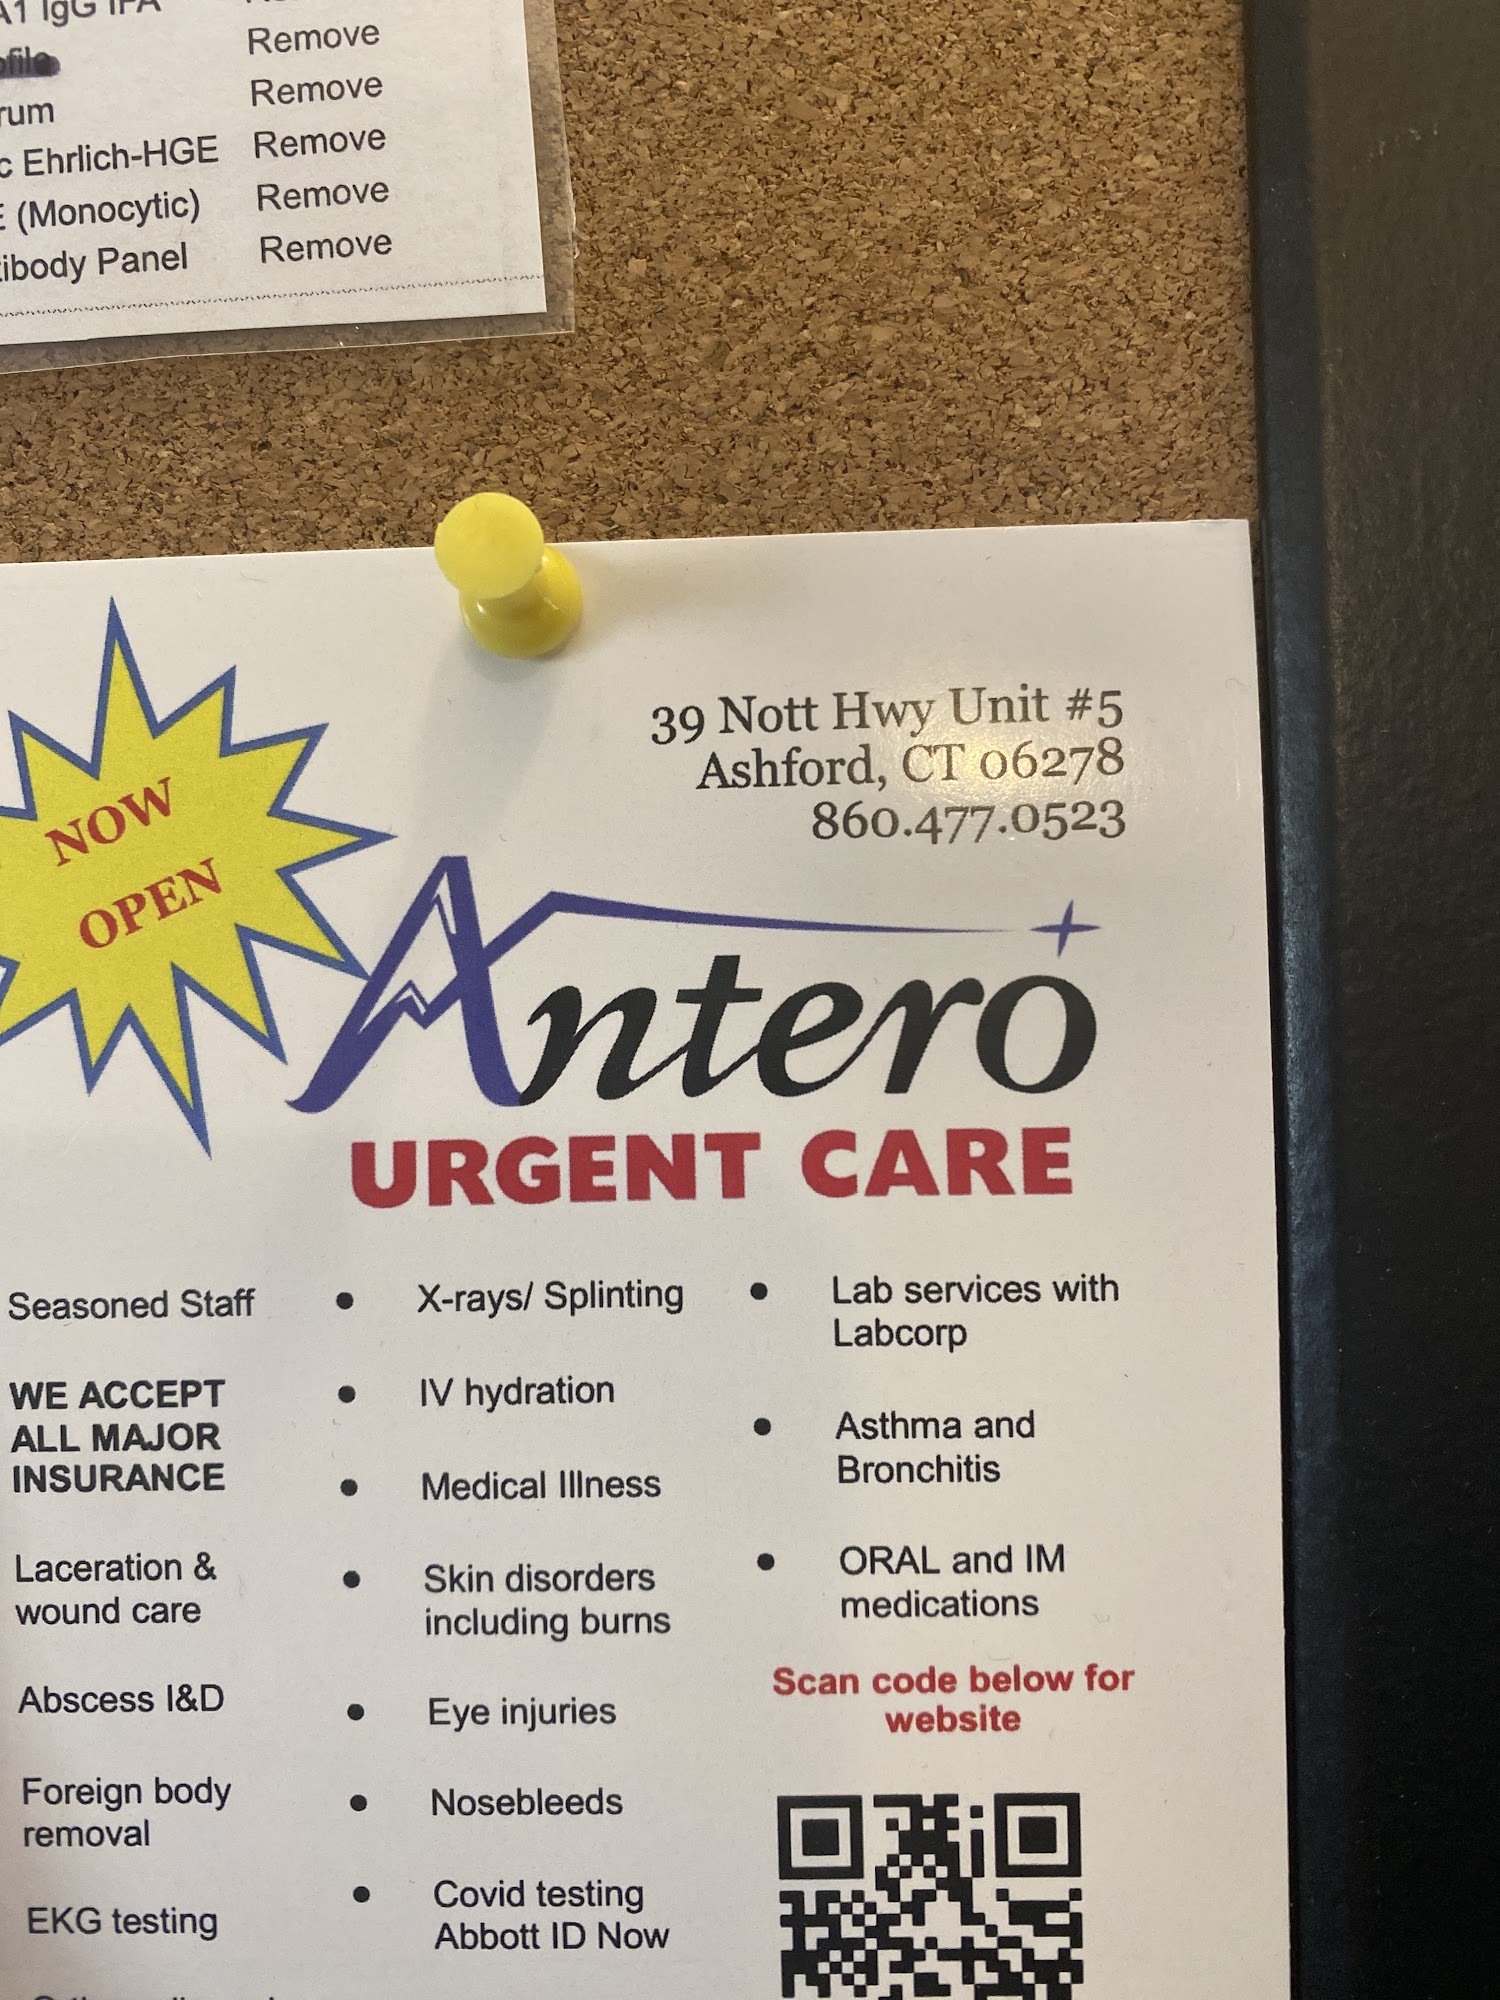 Antero Urgent Care 39 Nott Hwy Unit #5, Ashford Connecticut 06278